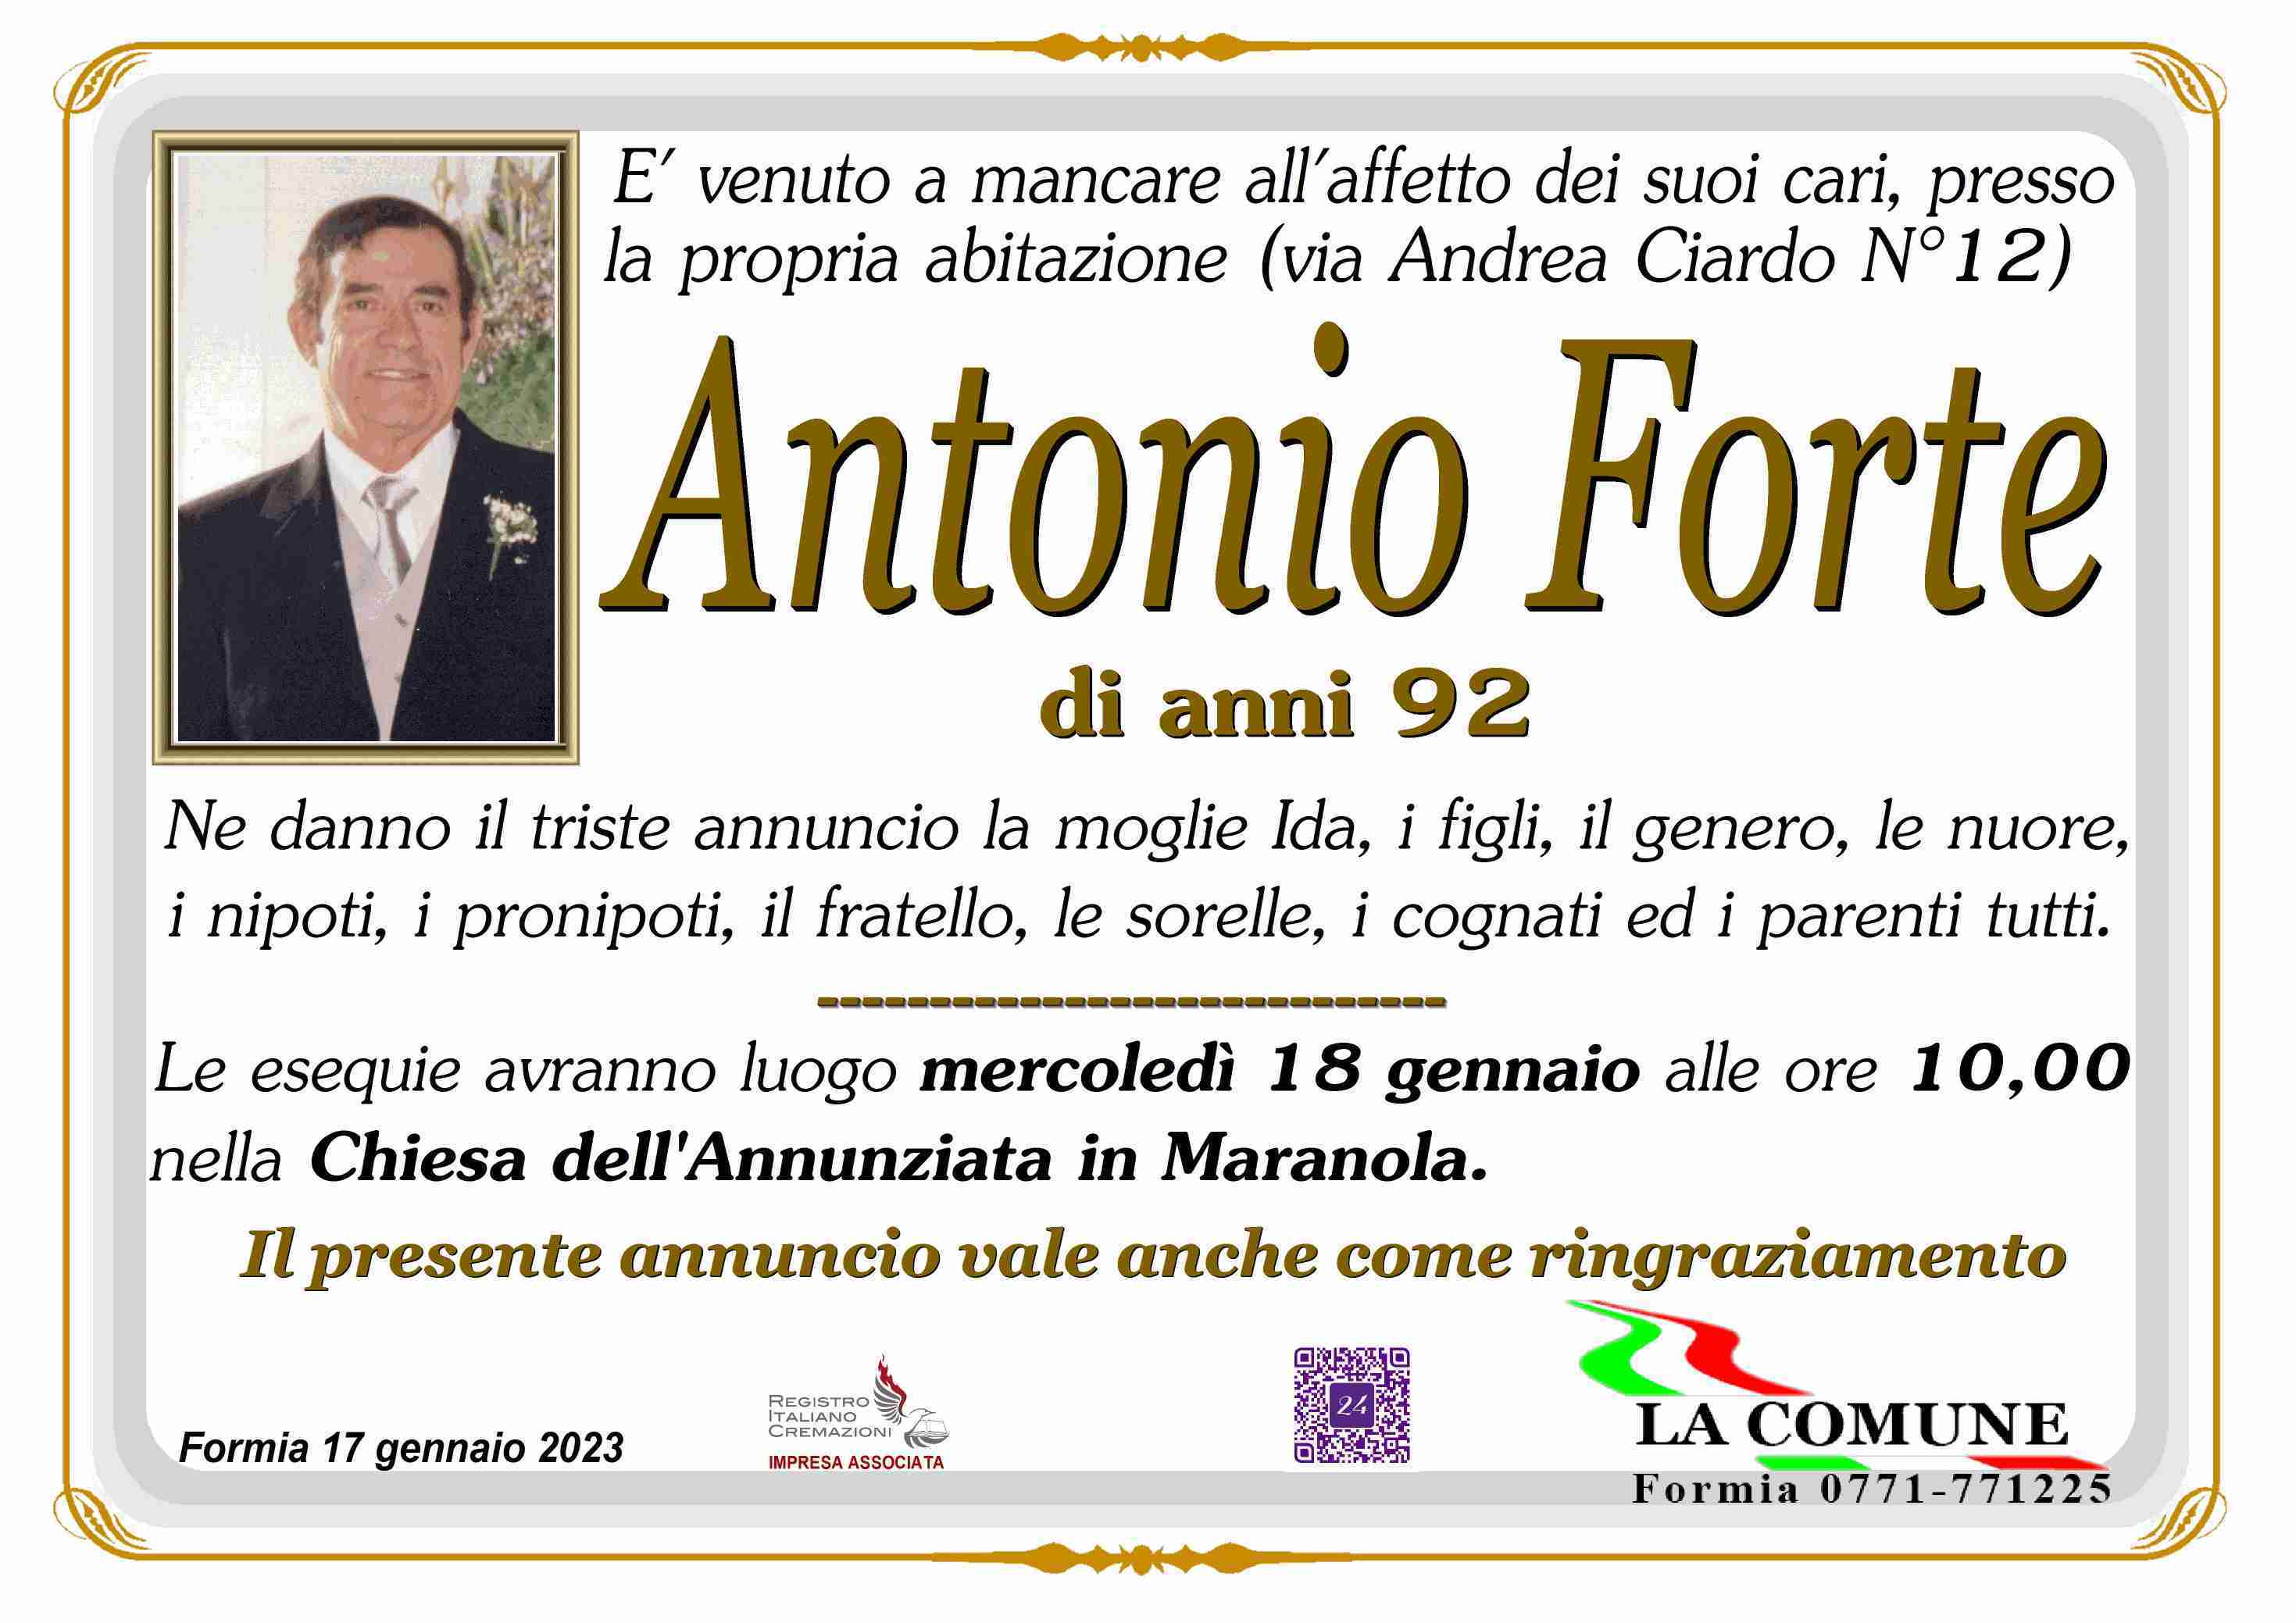 Antonio Forte